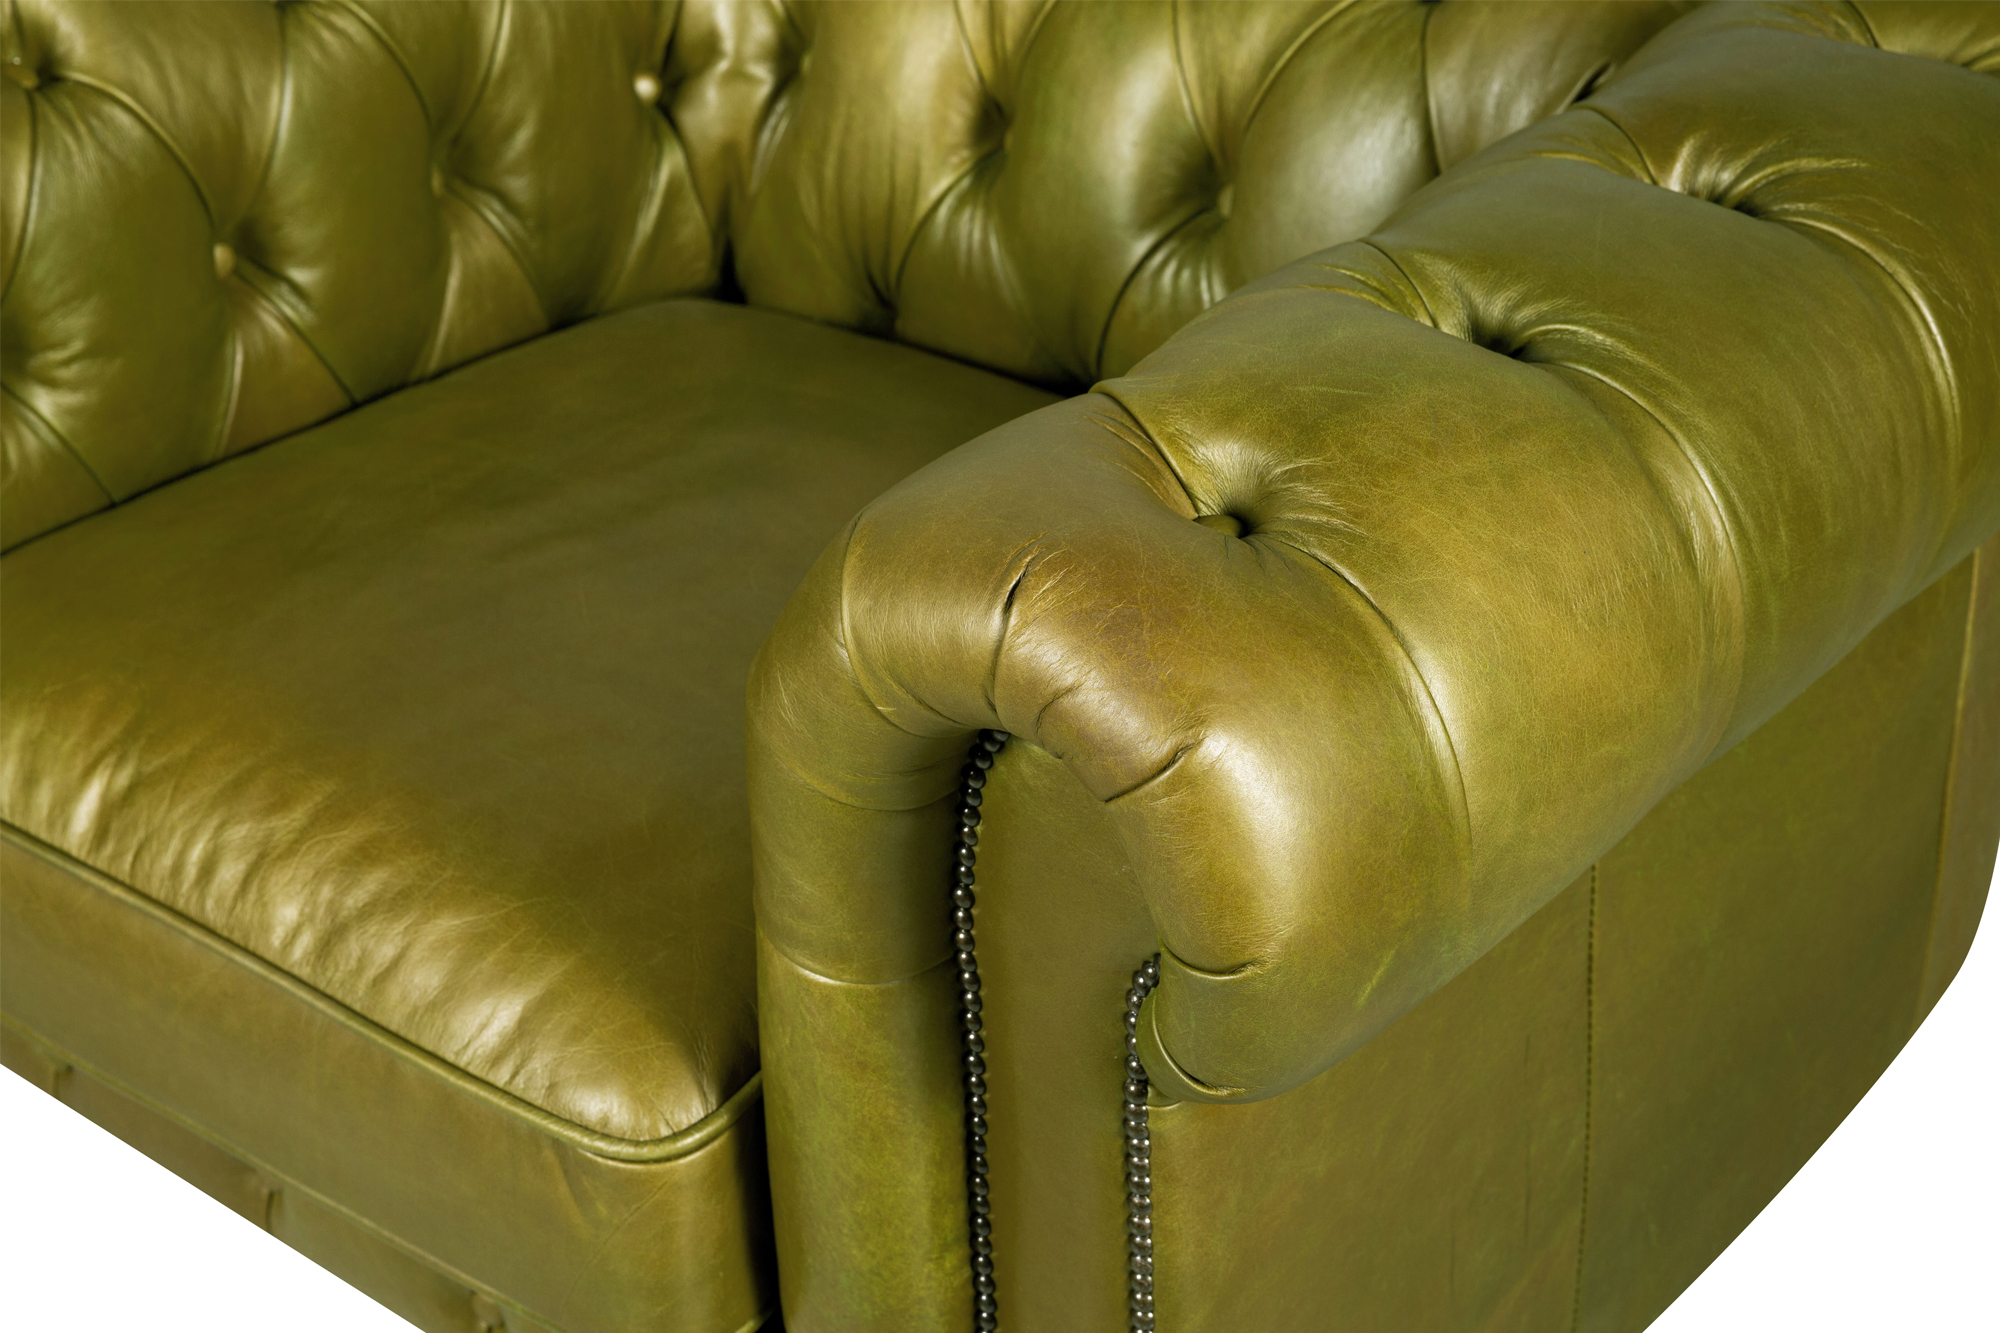 Oxford Single Seat Leather Sofa Olive Green